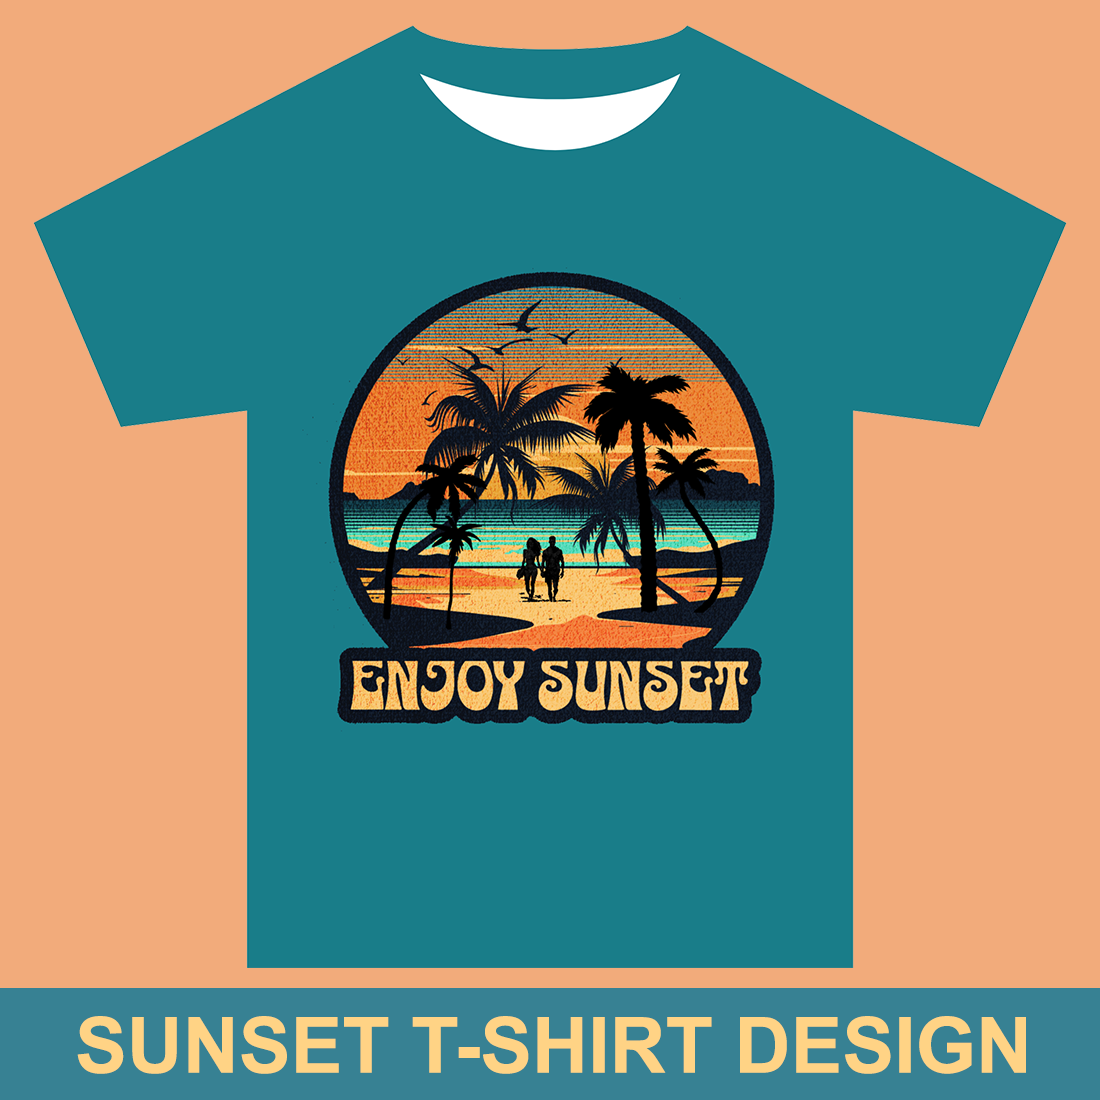 Sunset beach T-shirt preview image.